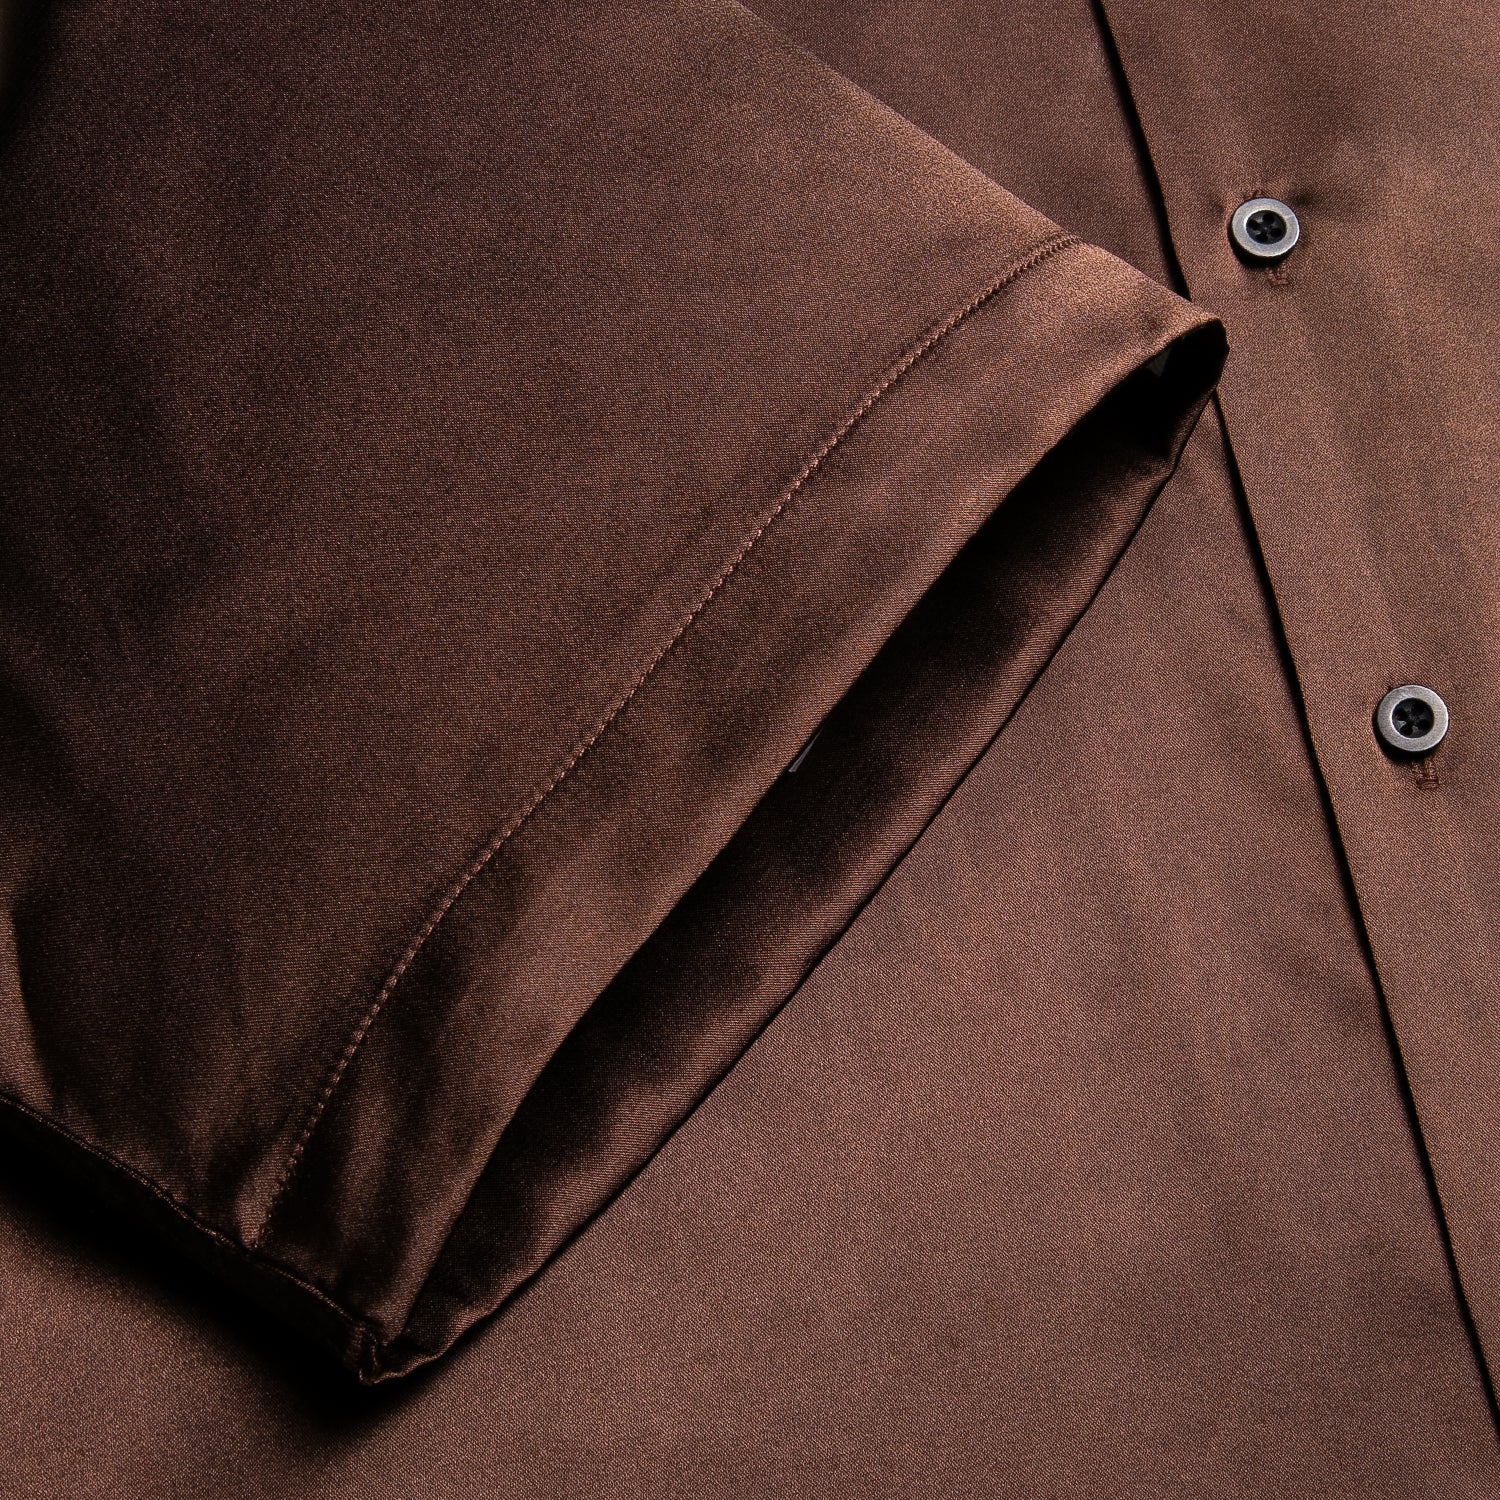 New Brown Black Solid Satin Men's Short Sleeve Shirt